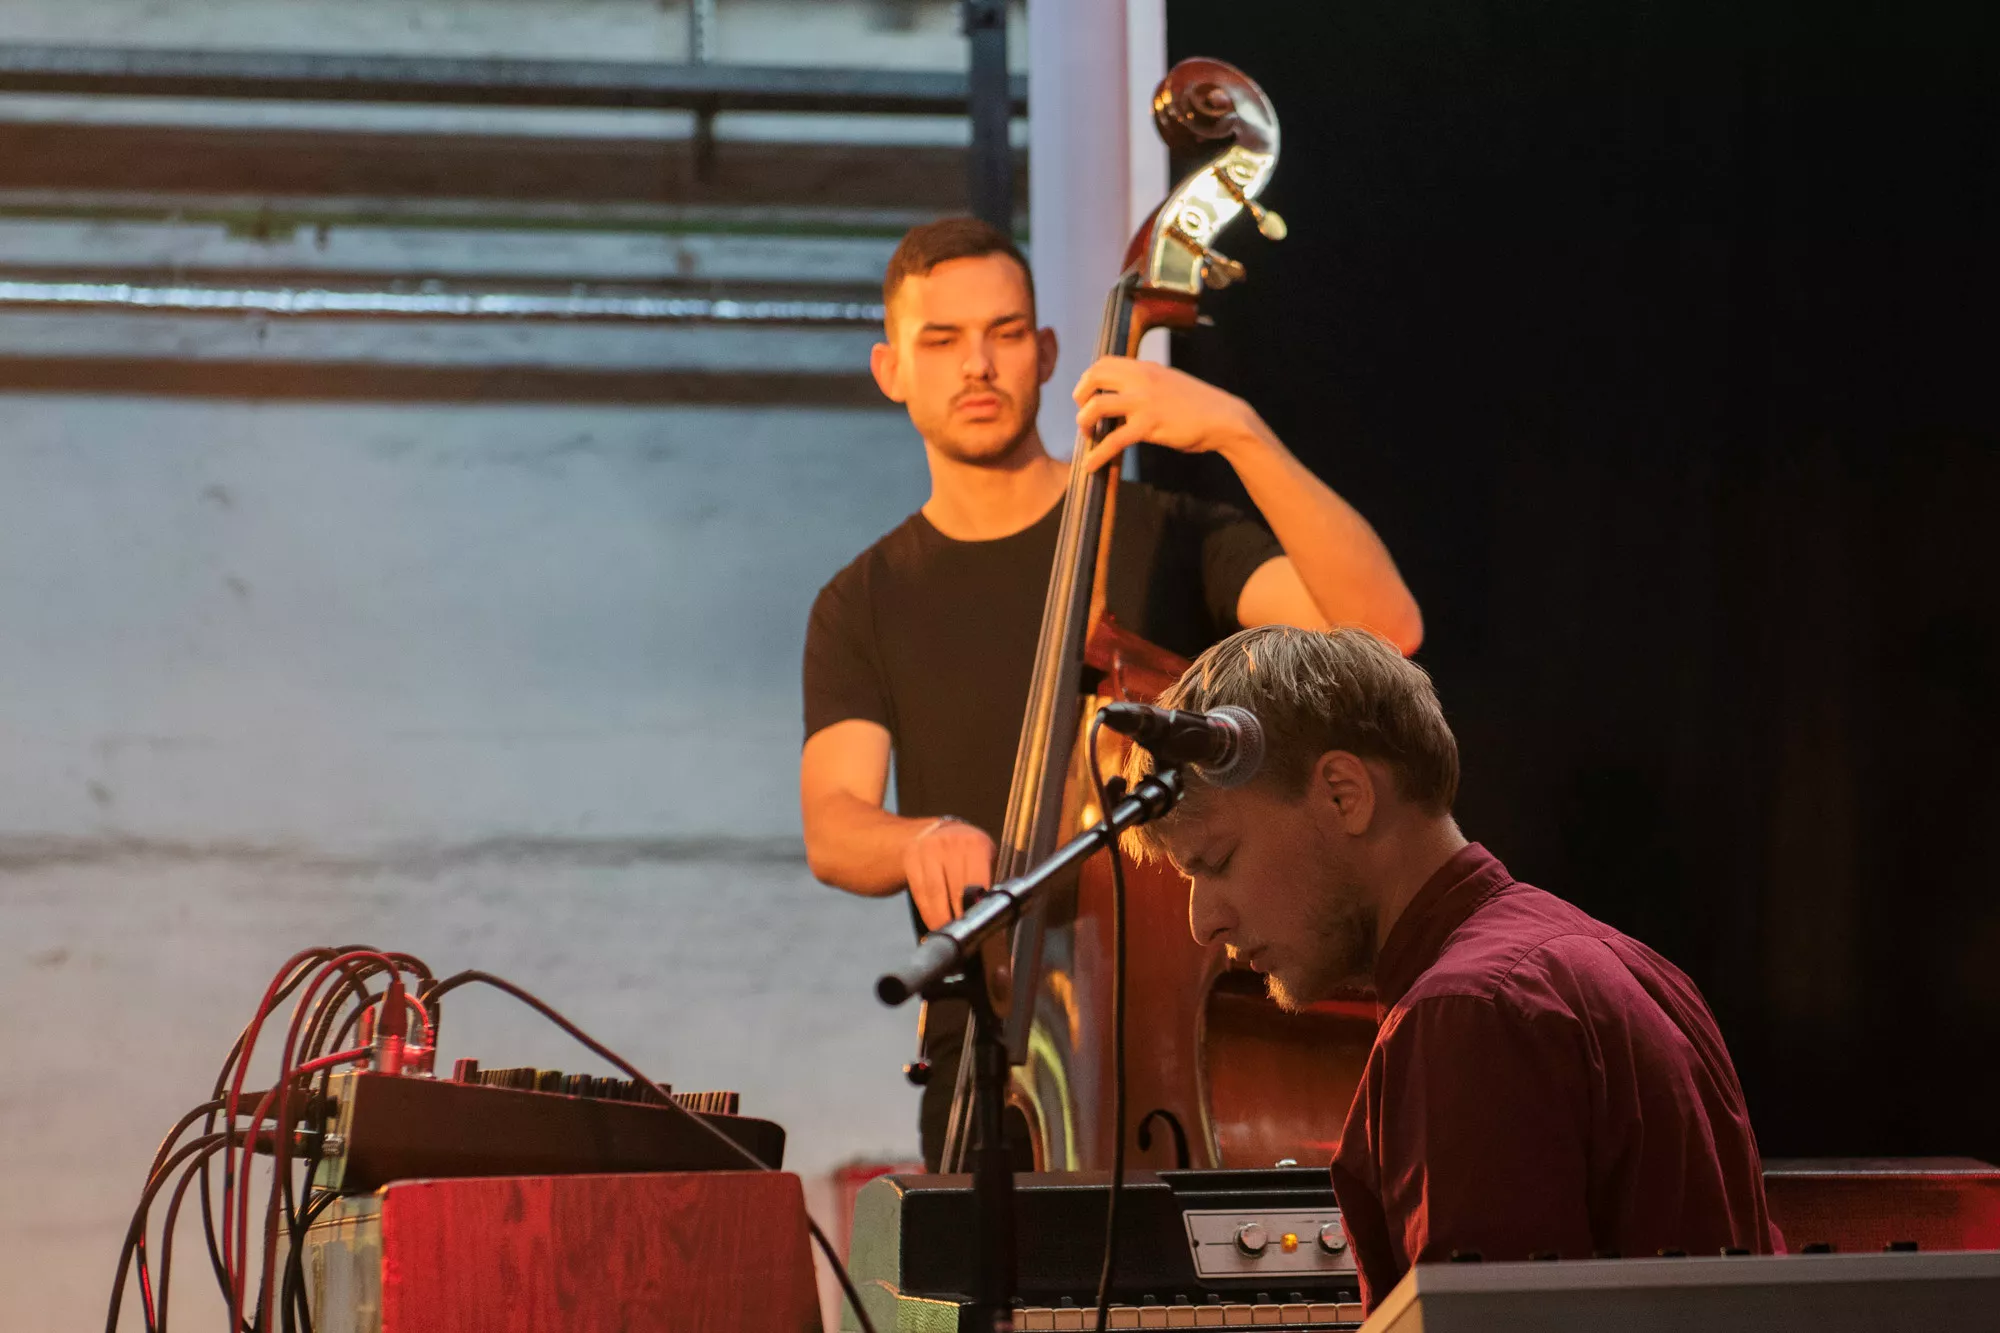 Copenhagen Jazz Festival melder ud om aflysning